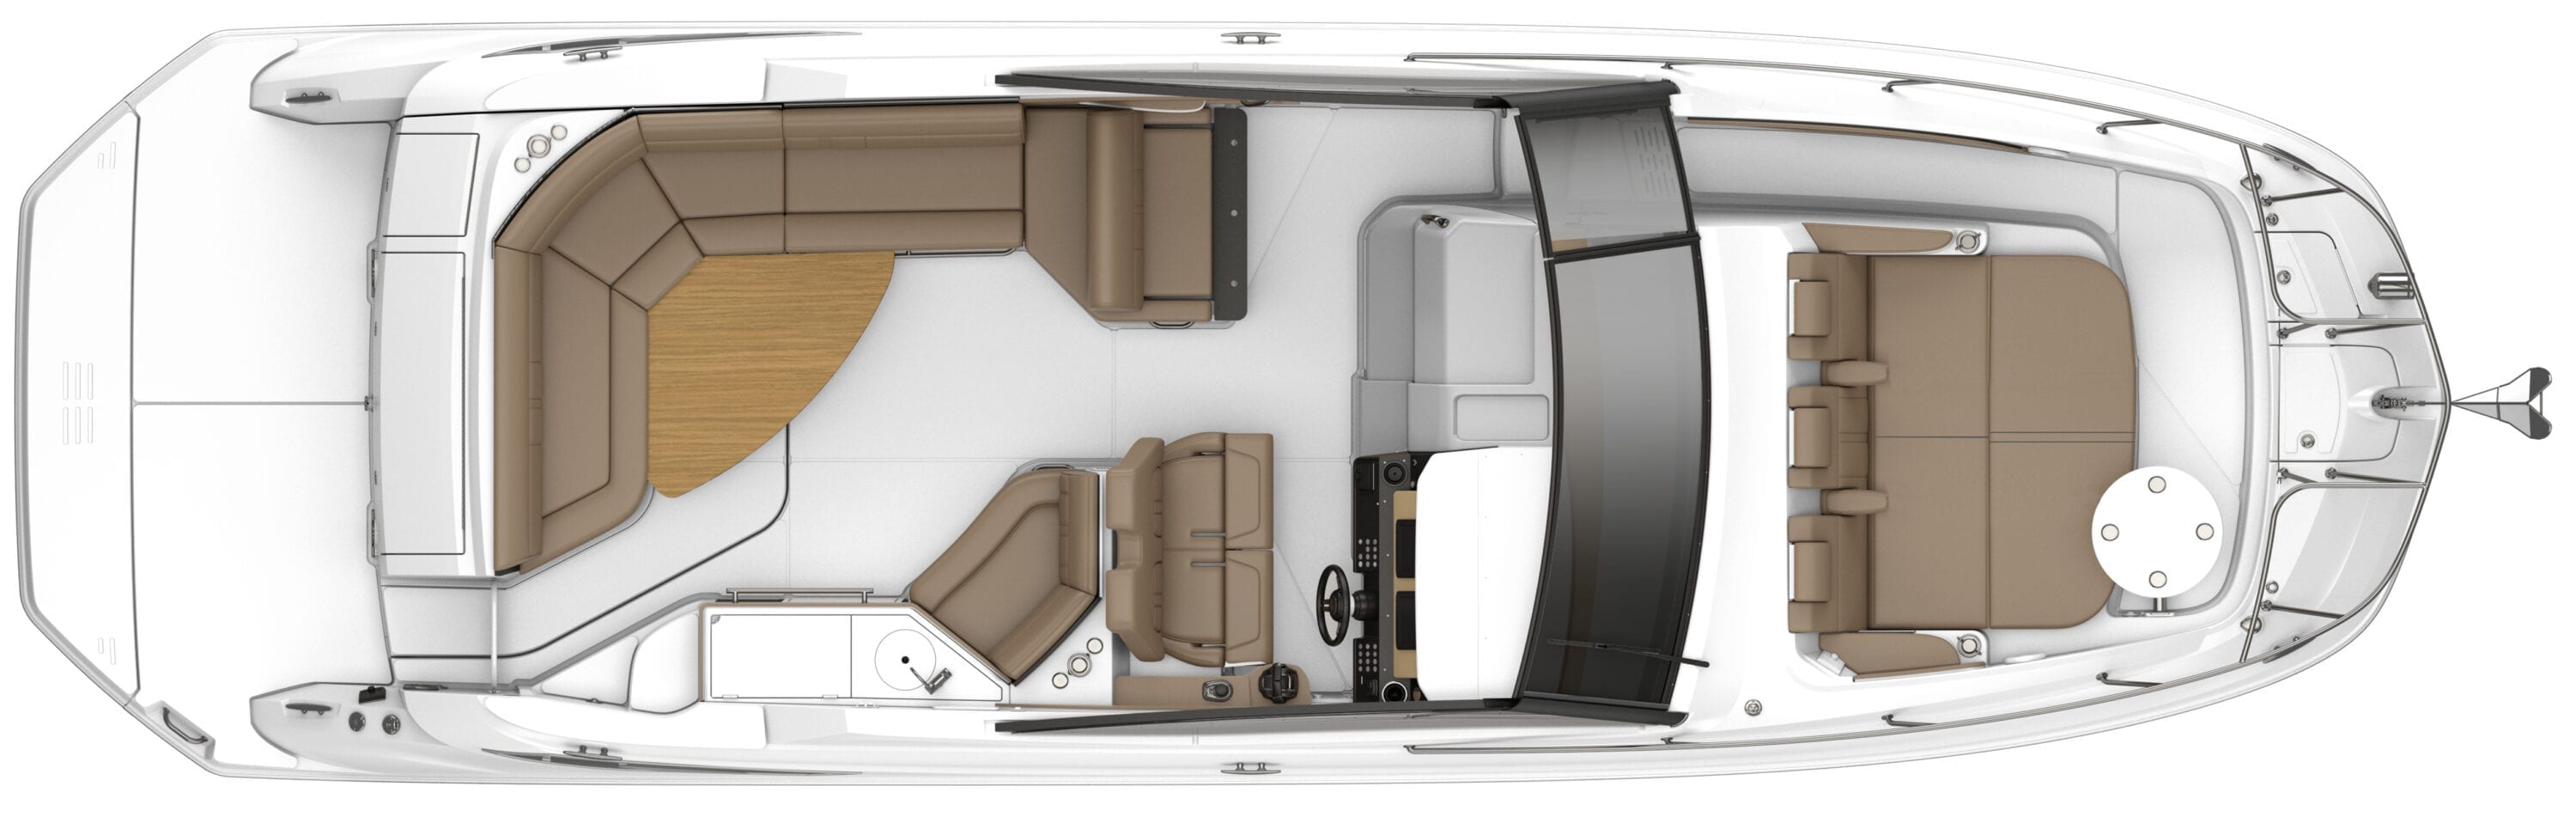 floorplan_2020_sundancer320_cockpit